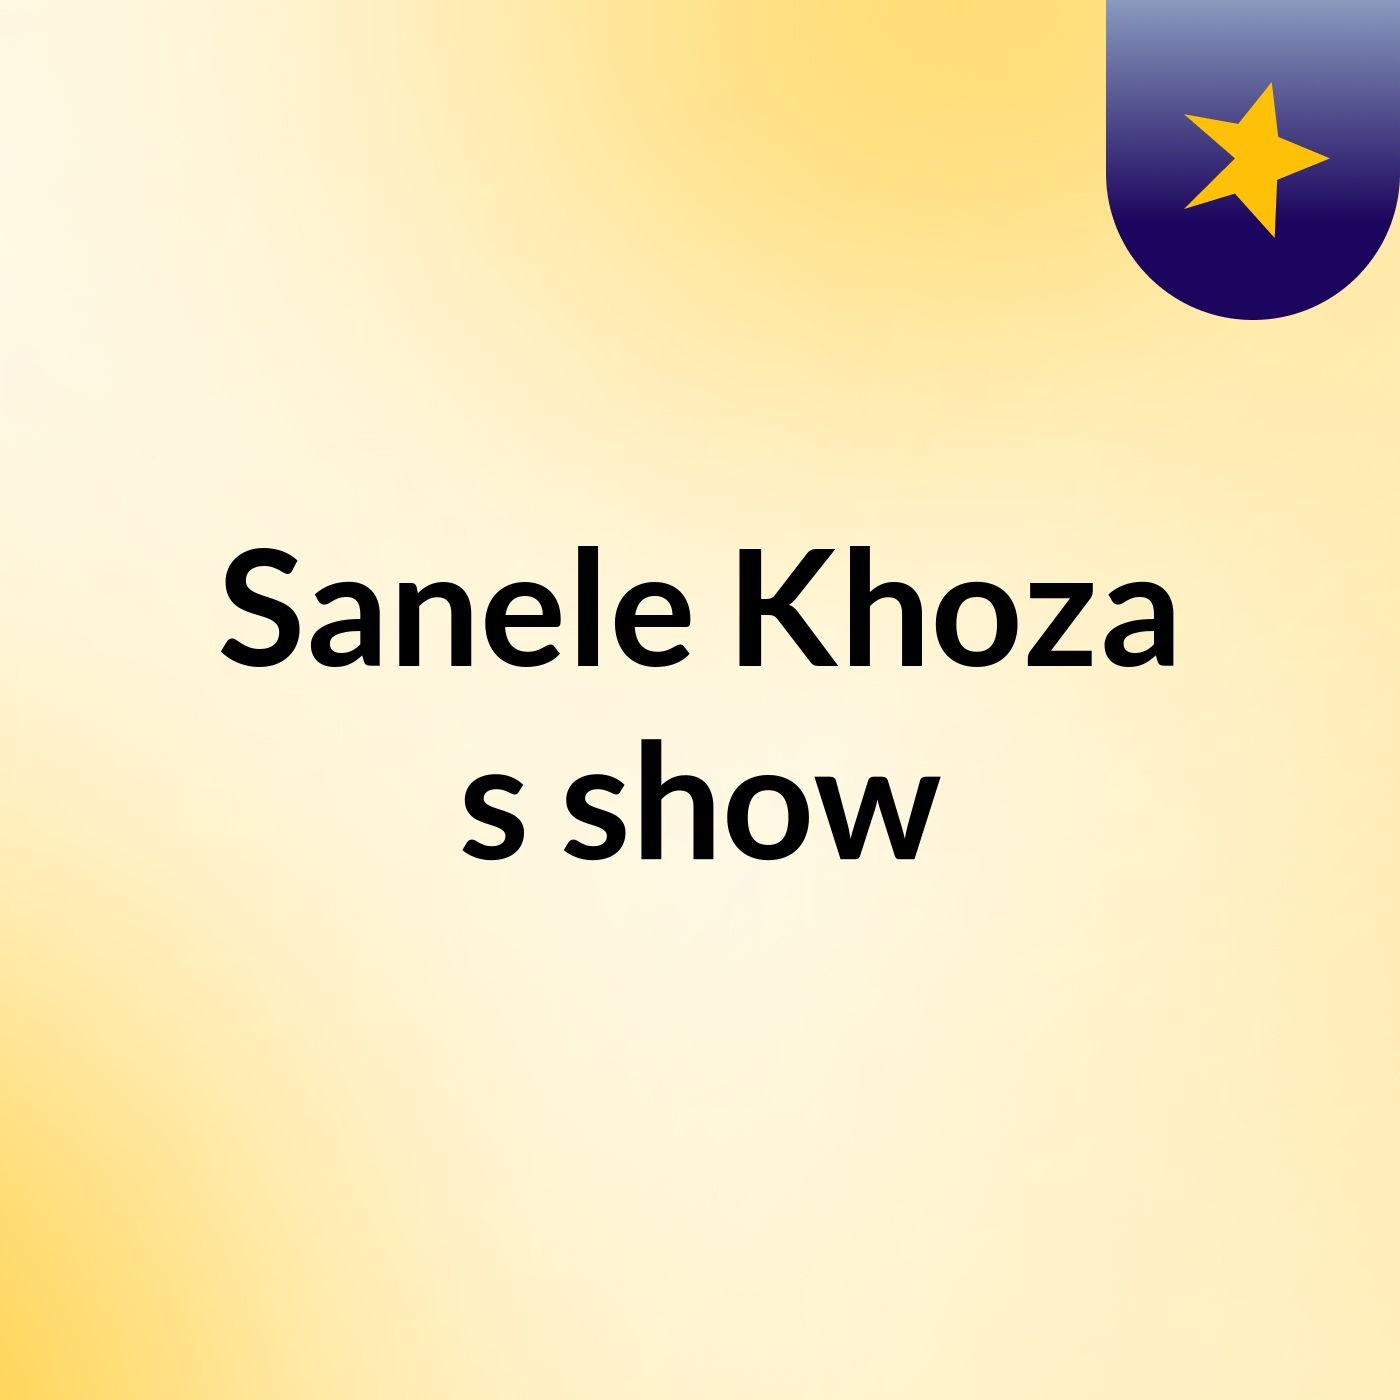 Sanele Khoza's show